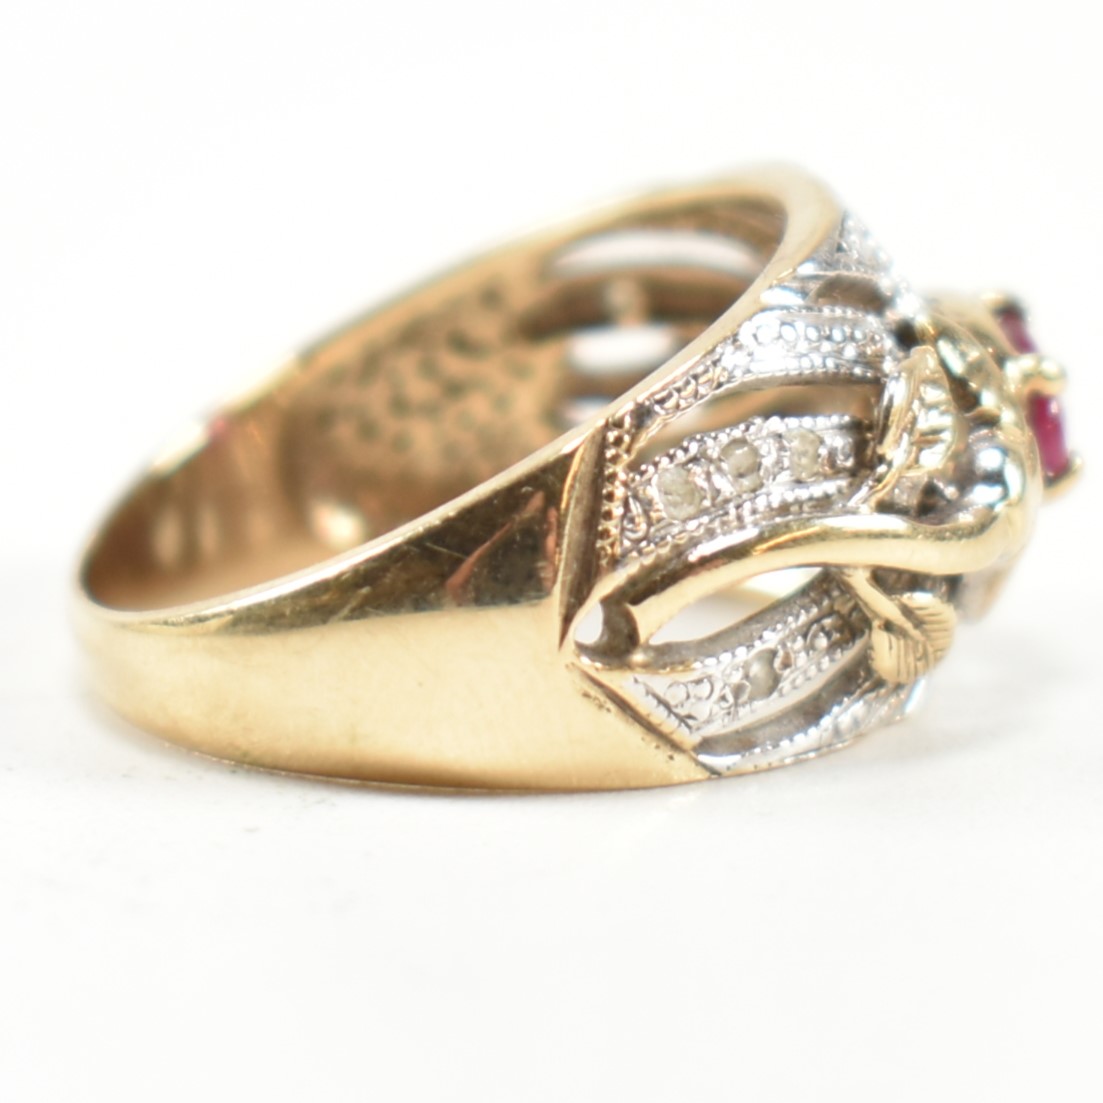 HALLMARKED 9CT GOLD RUBY & DIAMOND RING - Image 4 of 9